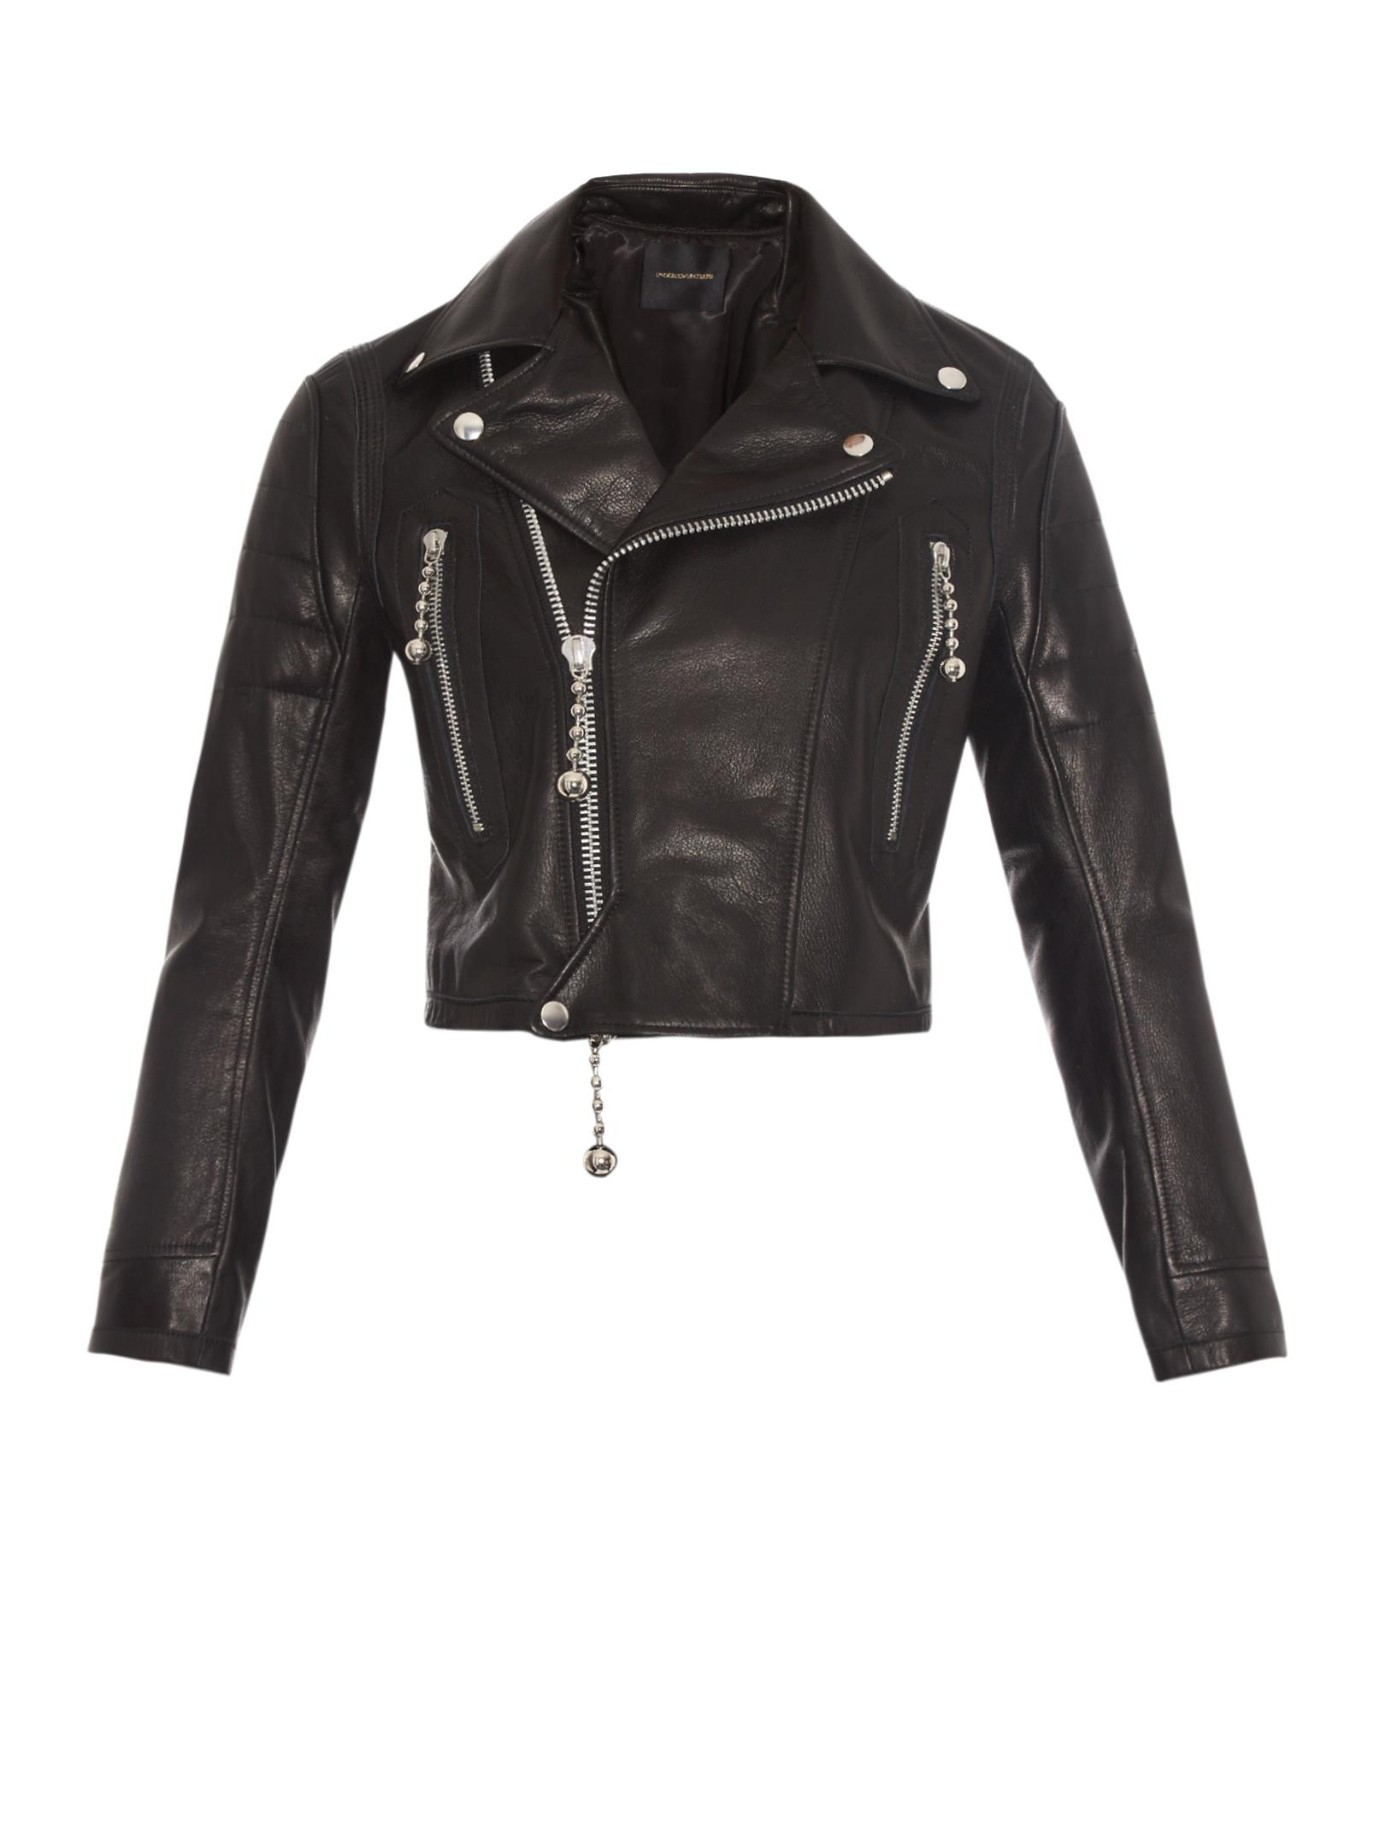 Undercover Cropped Tassel Leather Biker Jacket in Black | Lyst